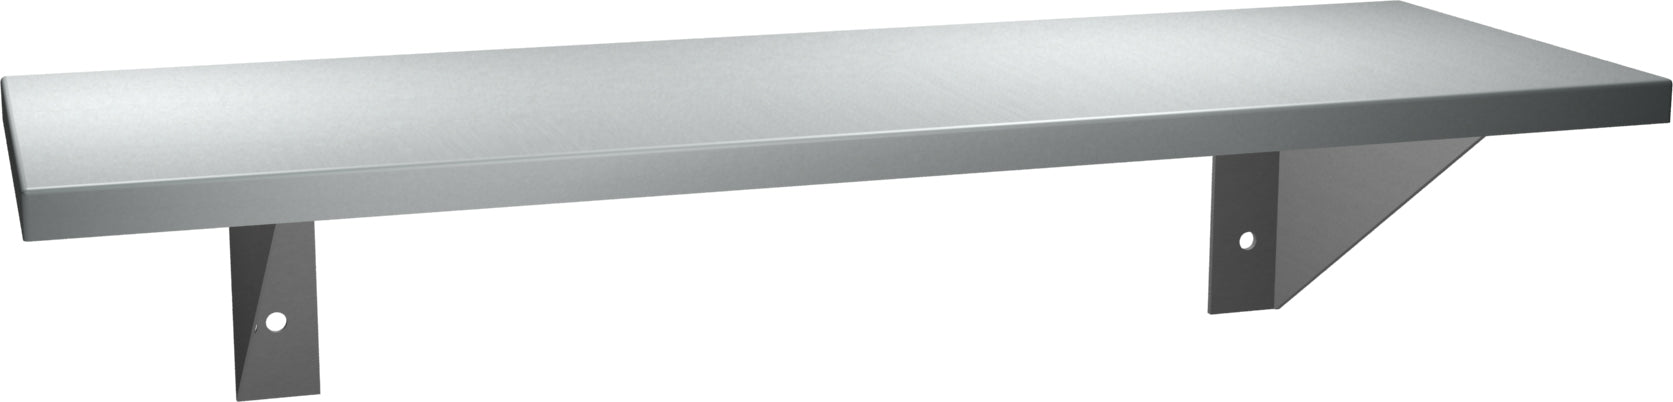 ASI 0692-516 Shelf, Stainless Steel, 5 X 16 Inch